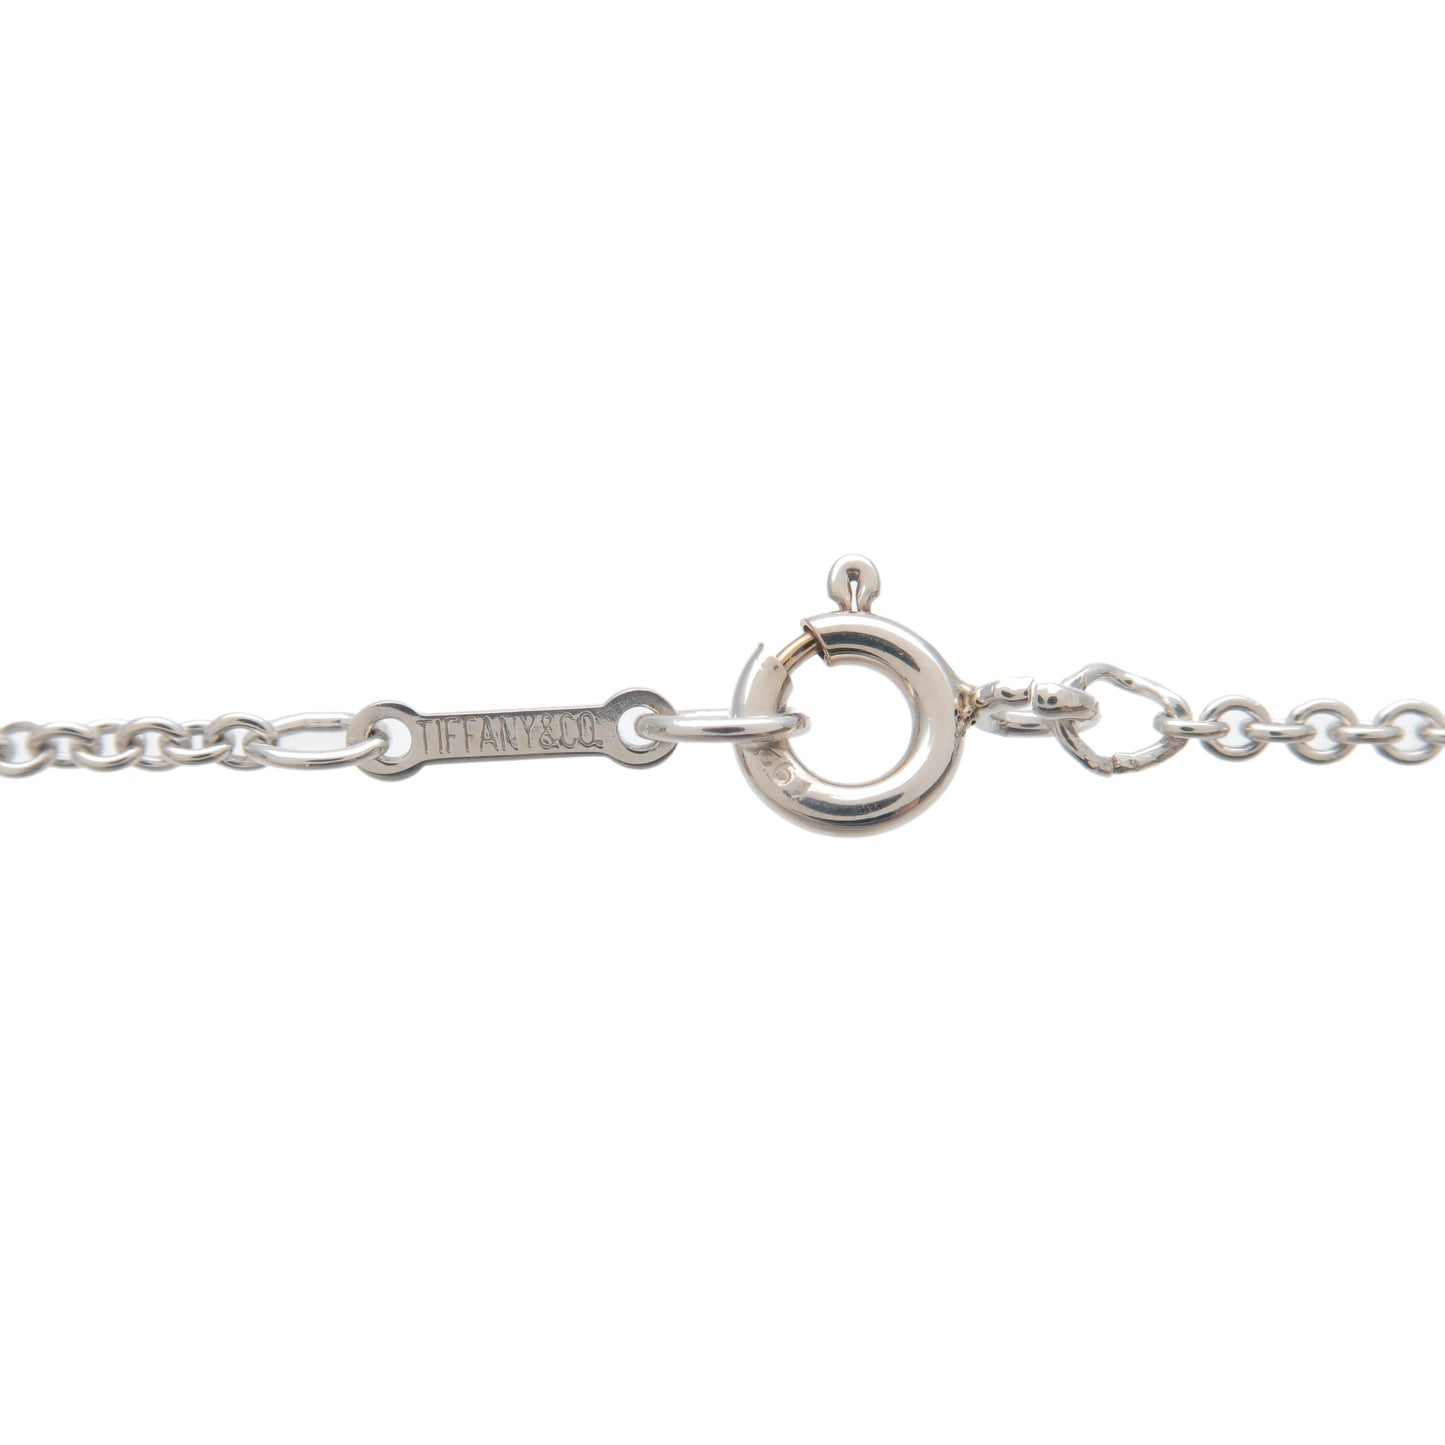 Tiffany&Co. Open Heart Necklace Medium SV925 Silver